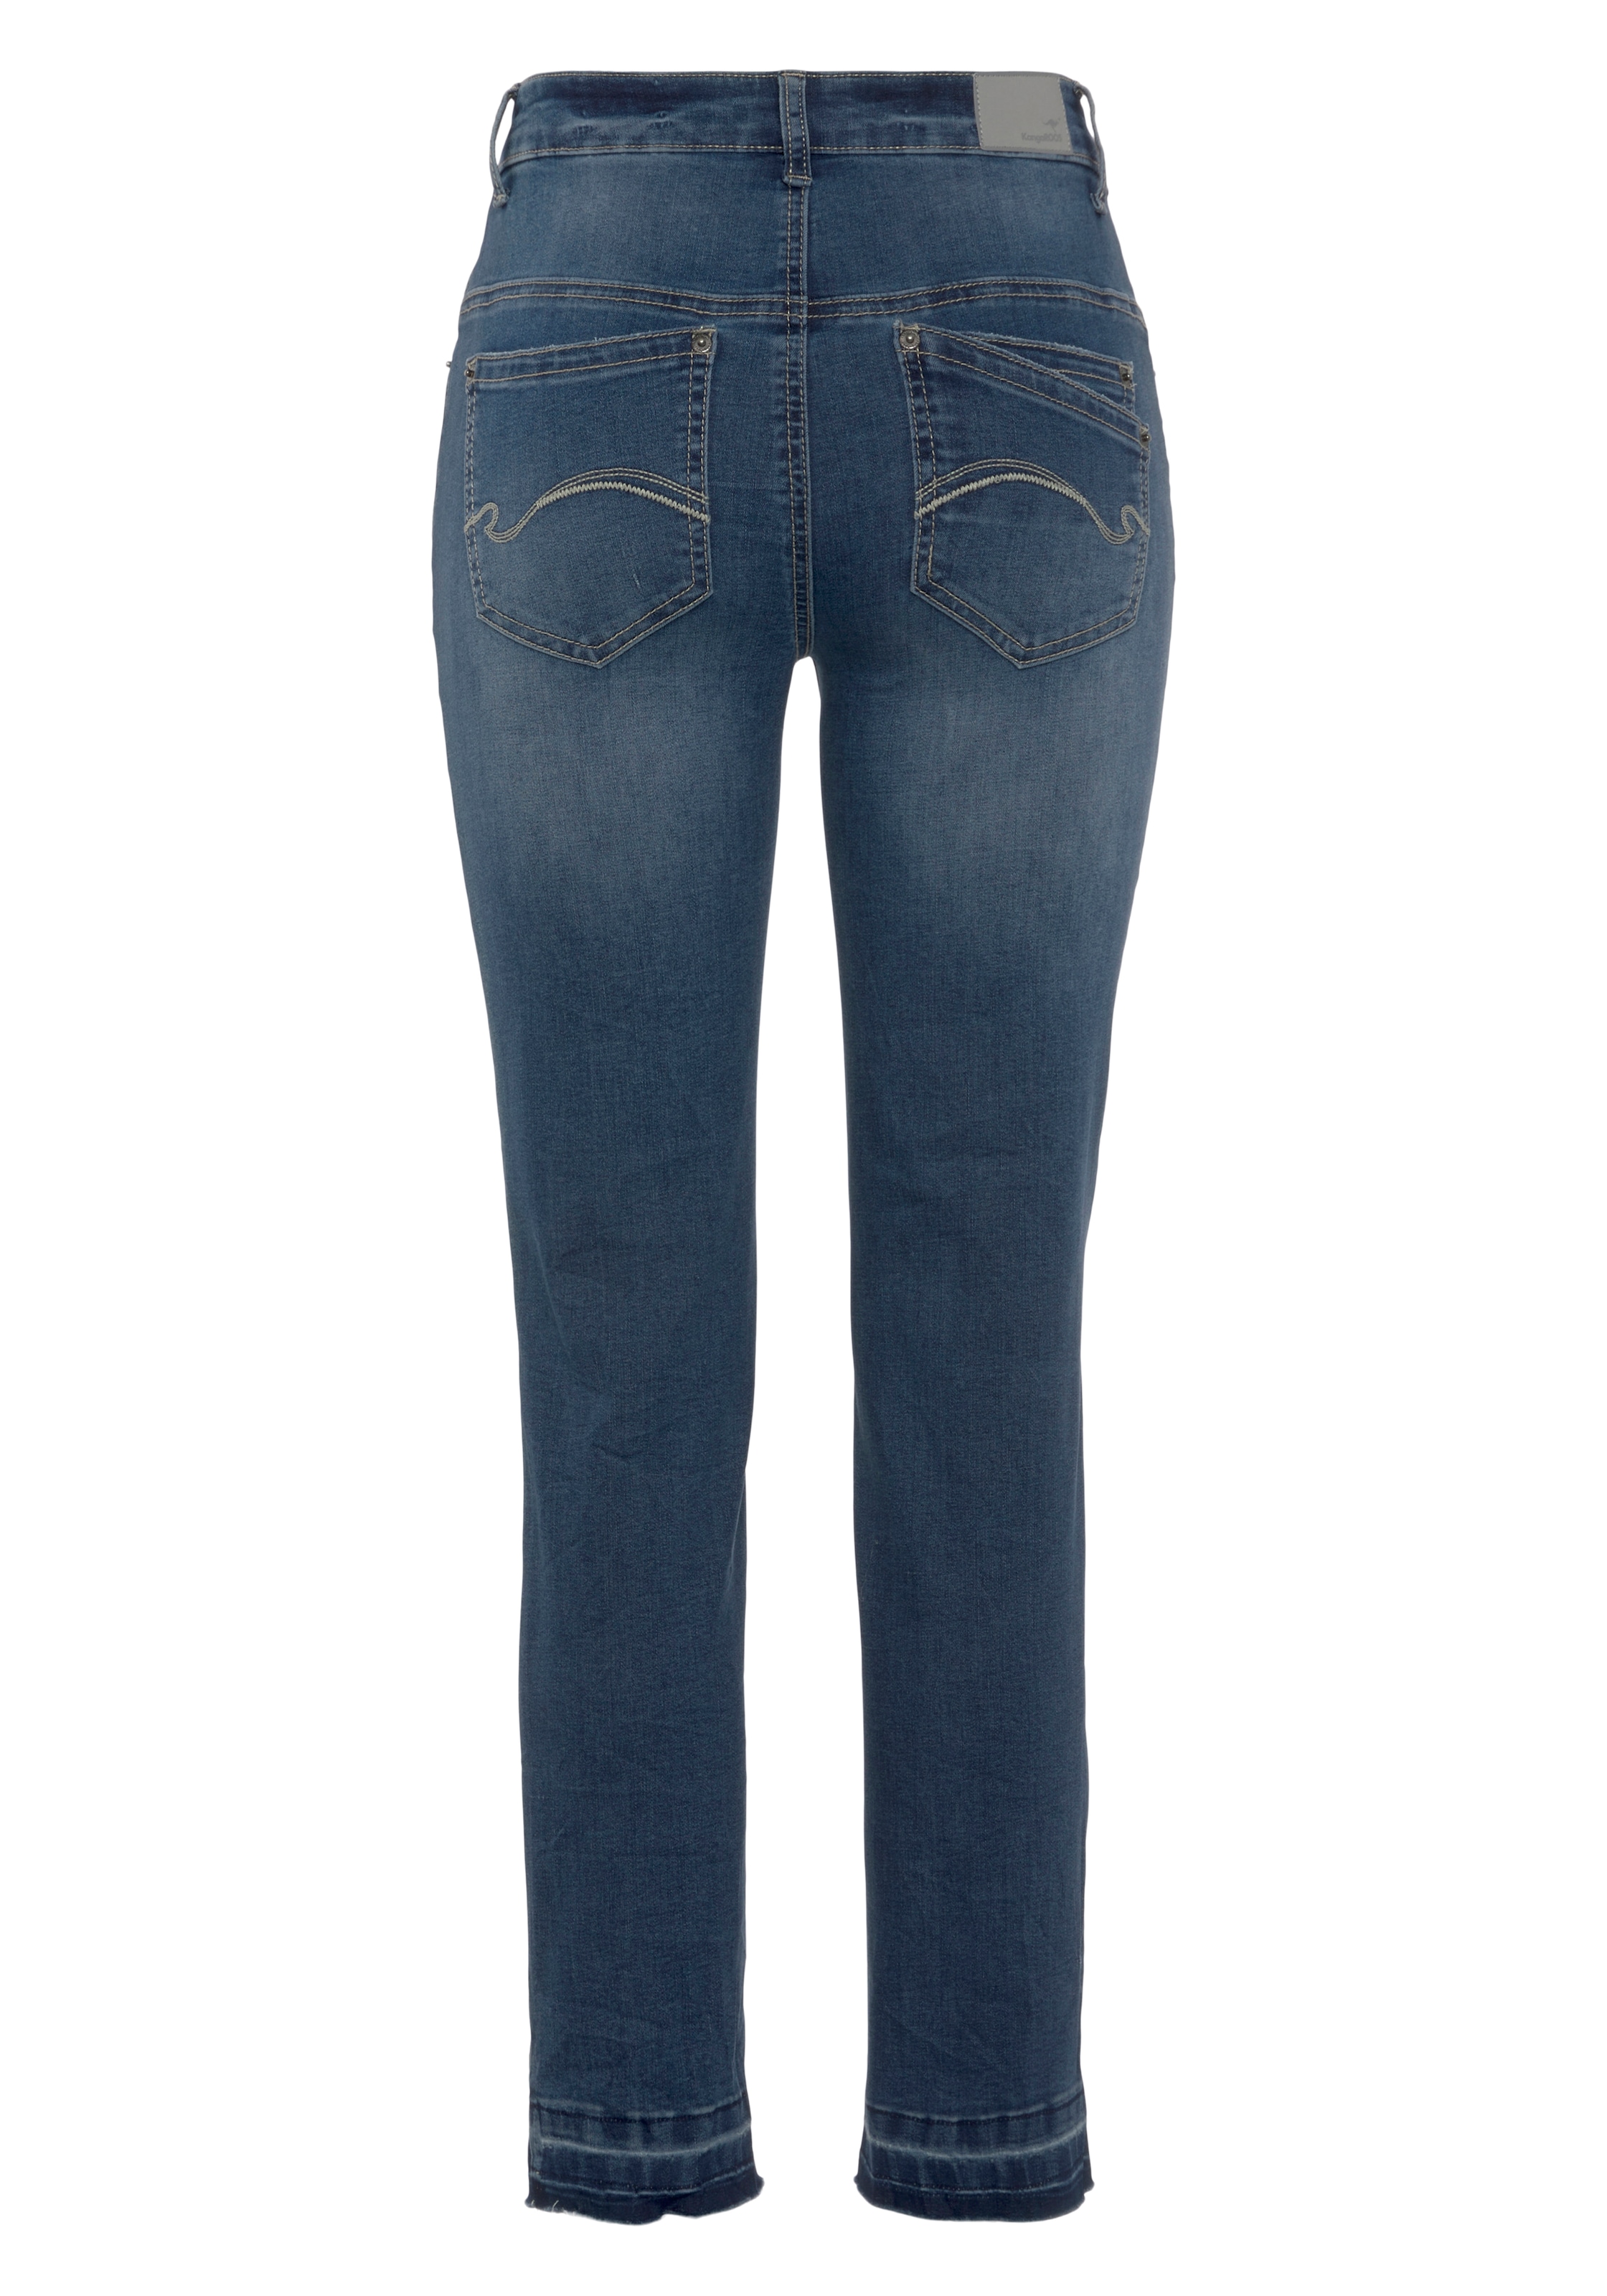 KangaROOS 7/8-Jeans »CULOTTE-JEANS«, mit ausgefranstem Saum KOLLEKTION - shoppen NEUE